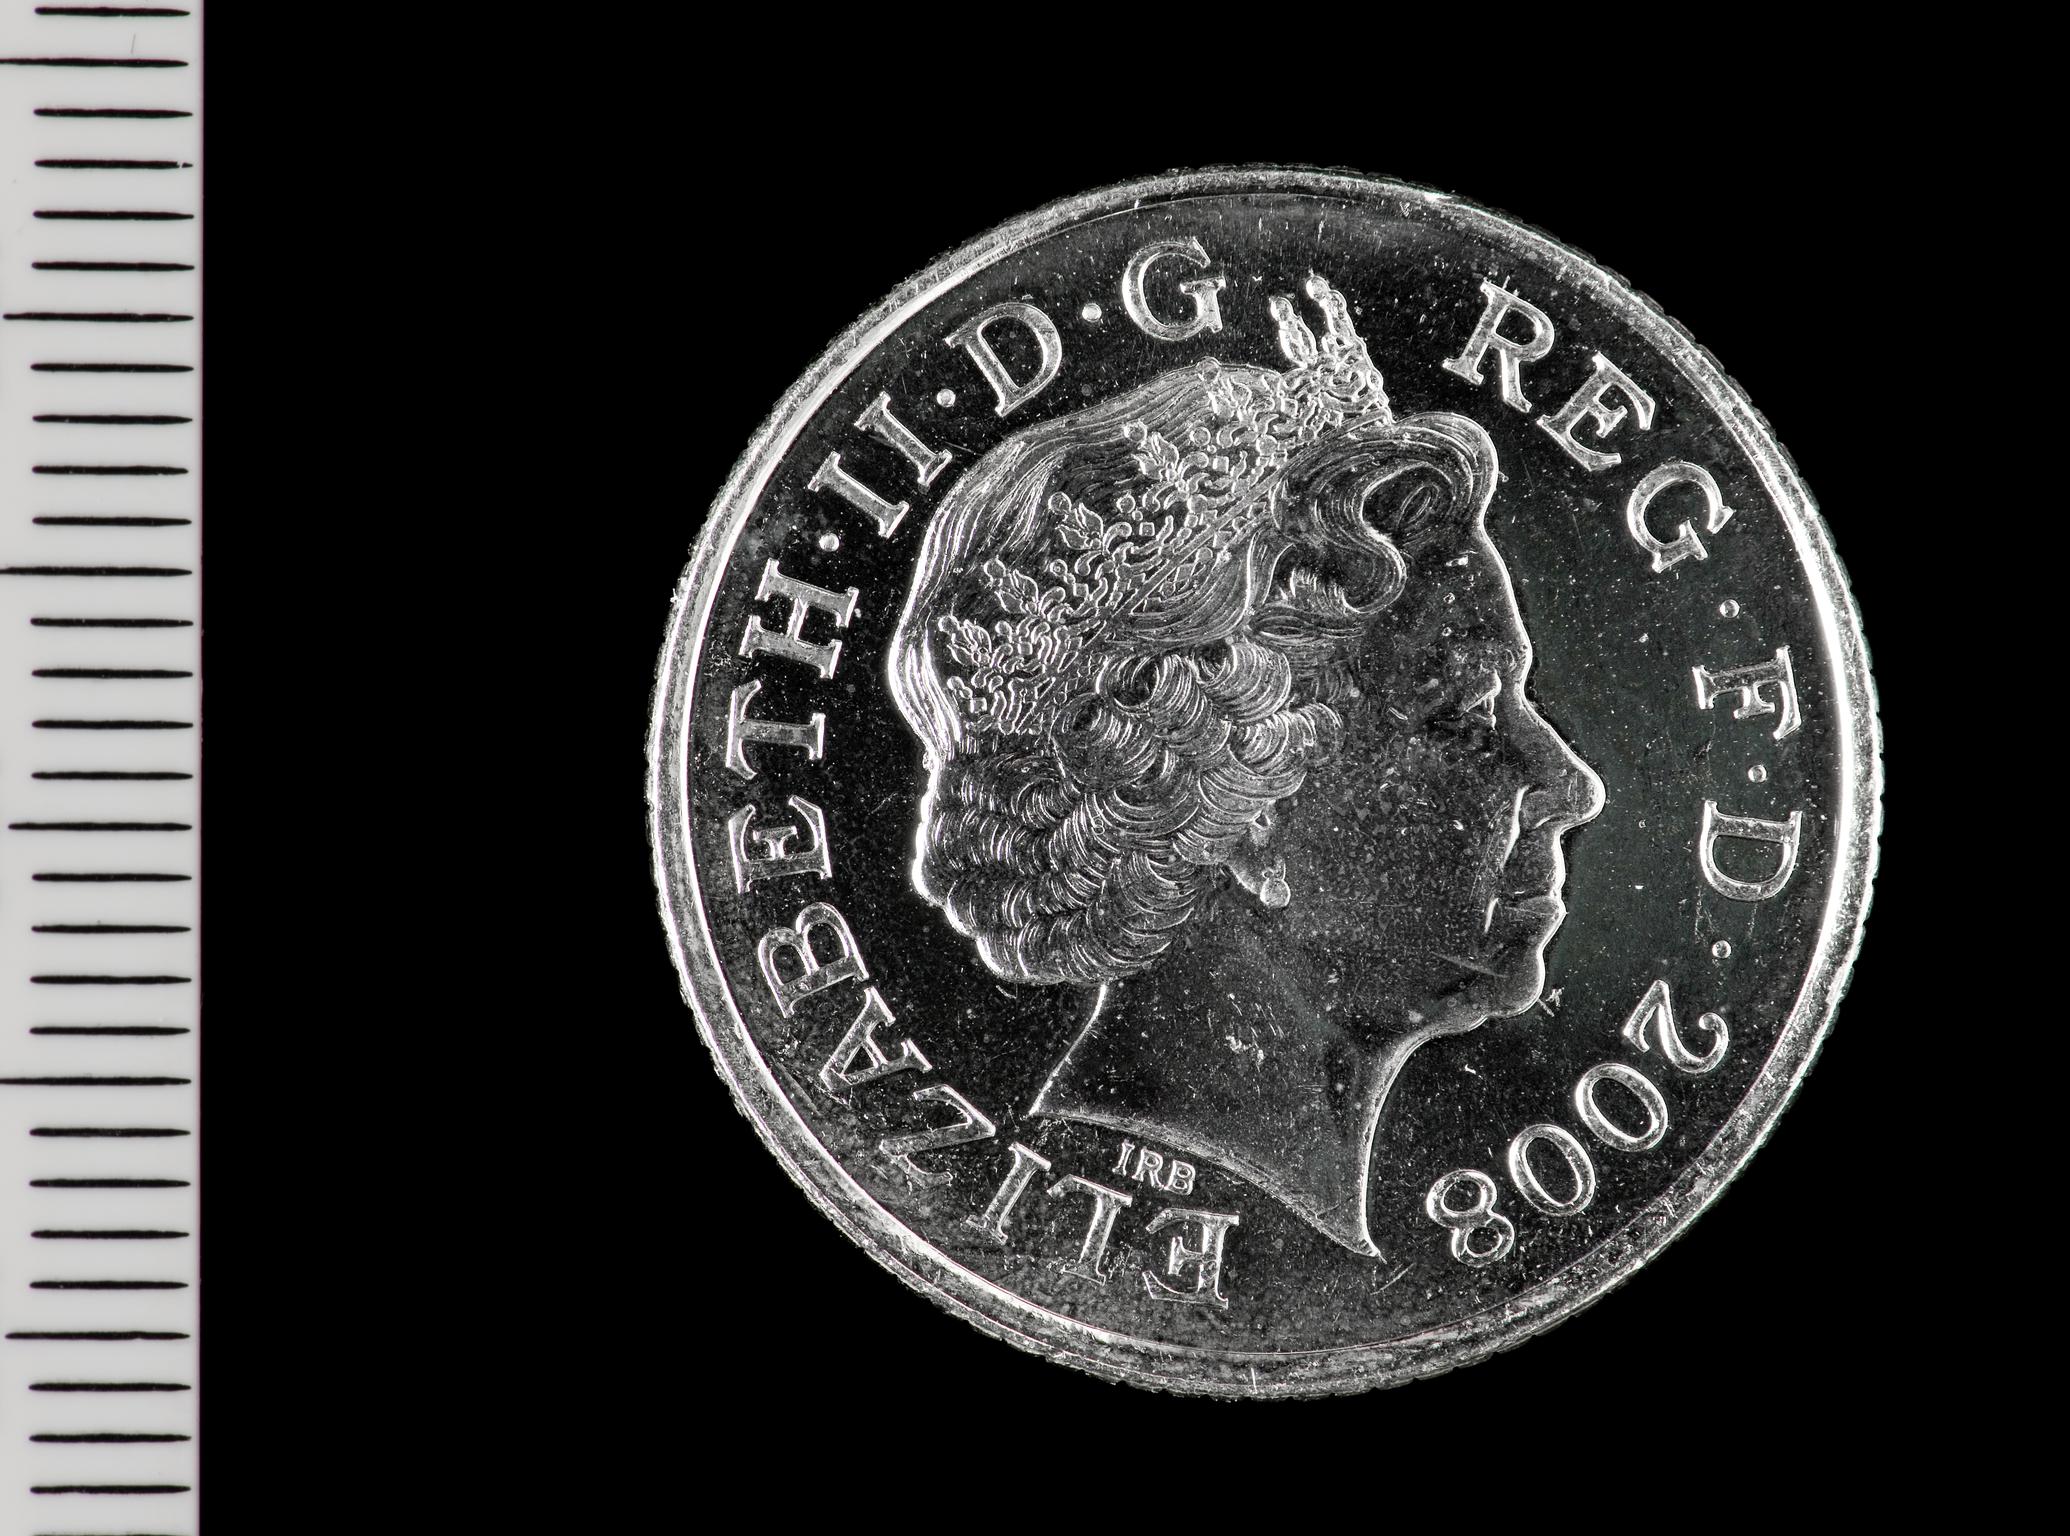 Elizabeth II ten pence (Royal Arms design)